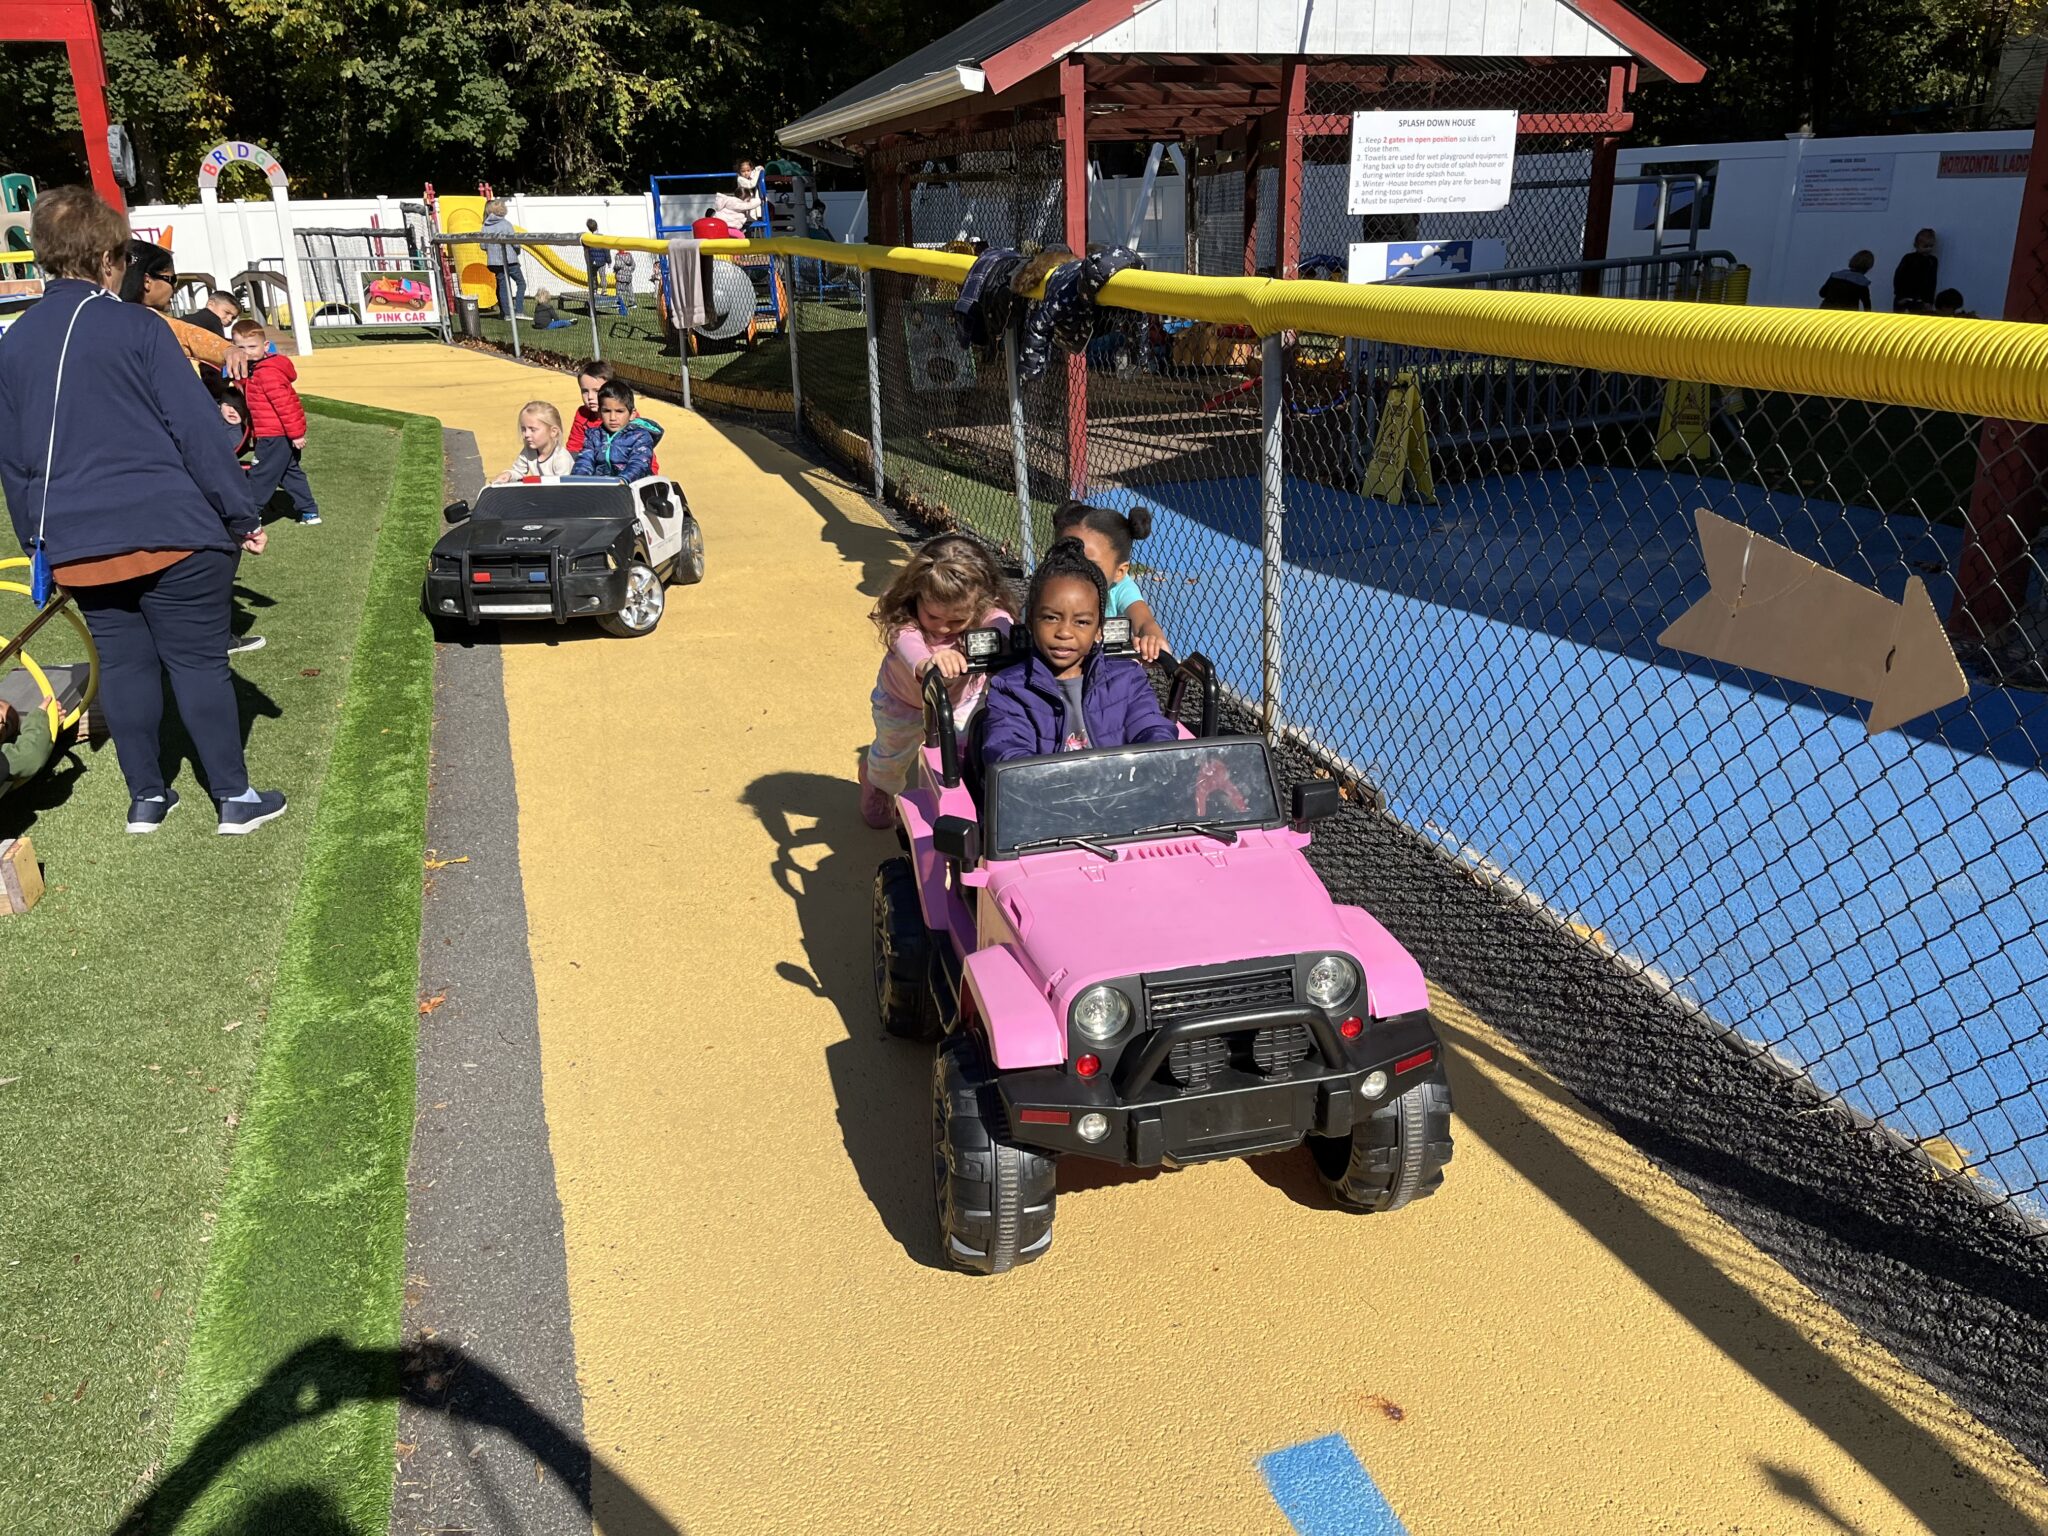 tom thumb preschool playground with go-cart track